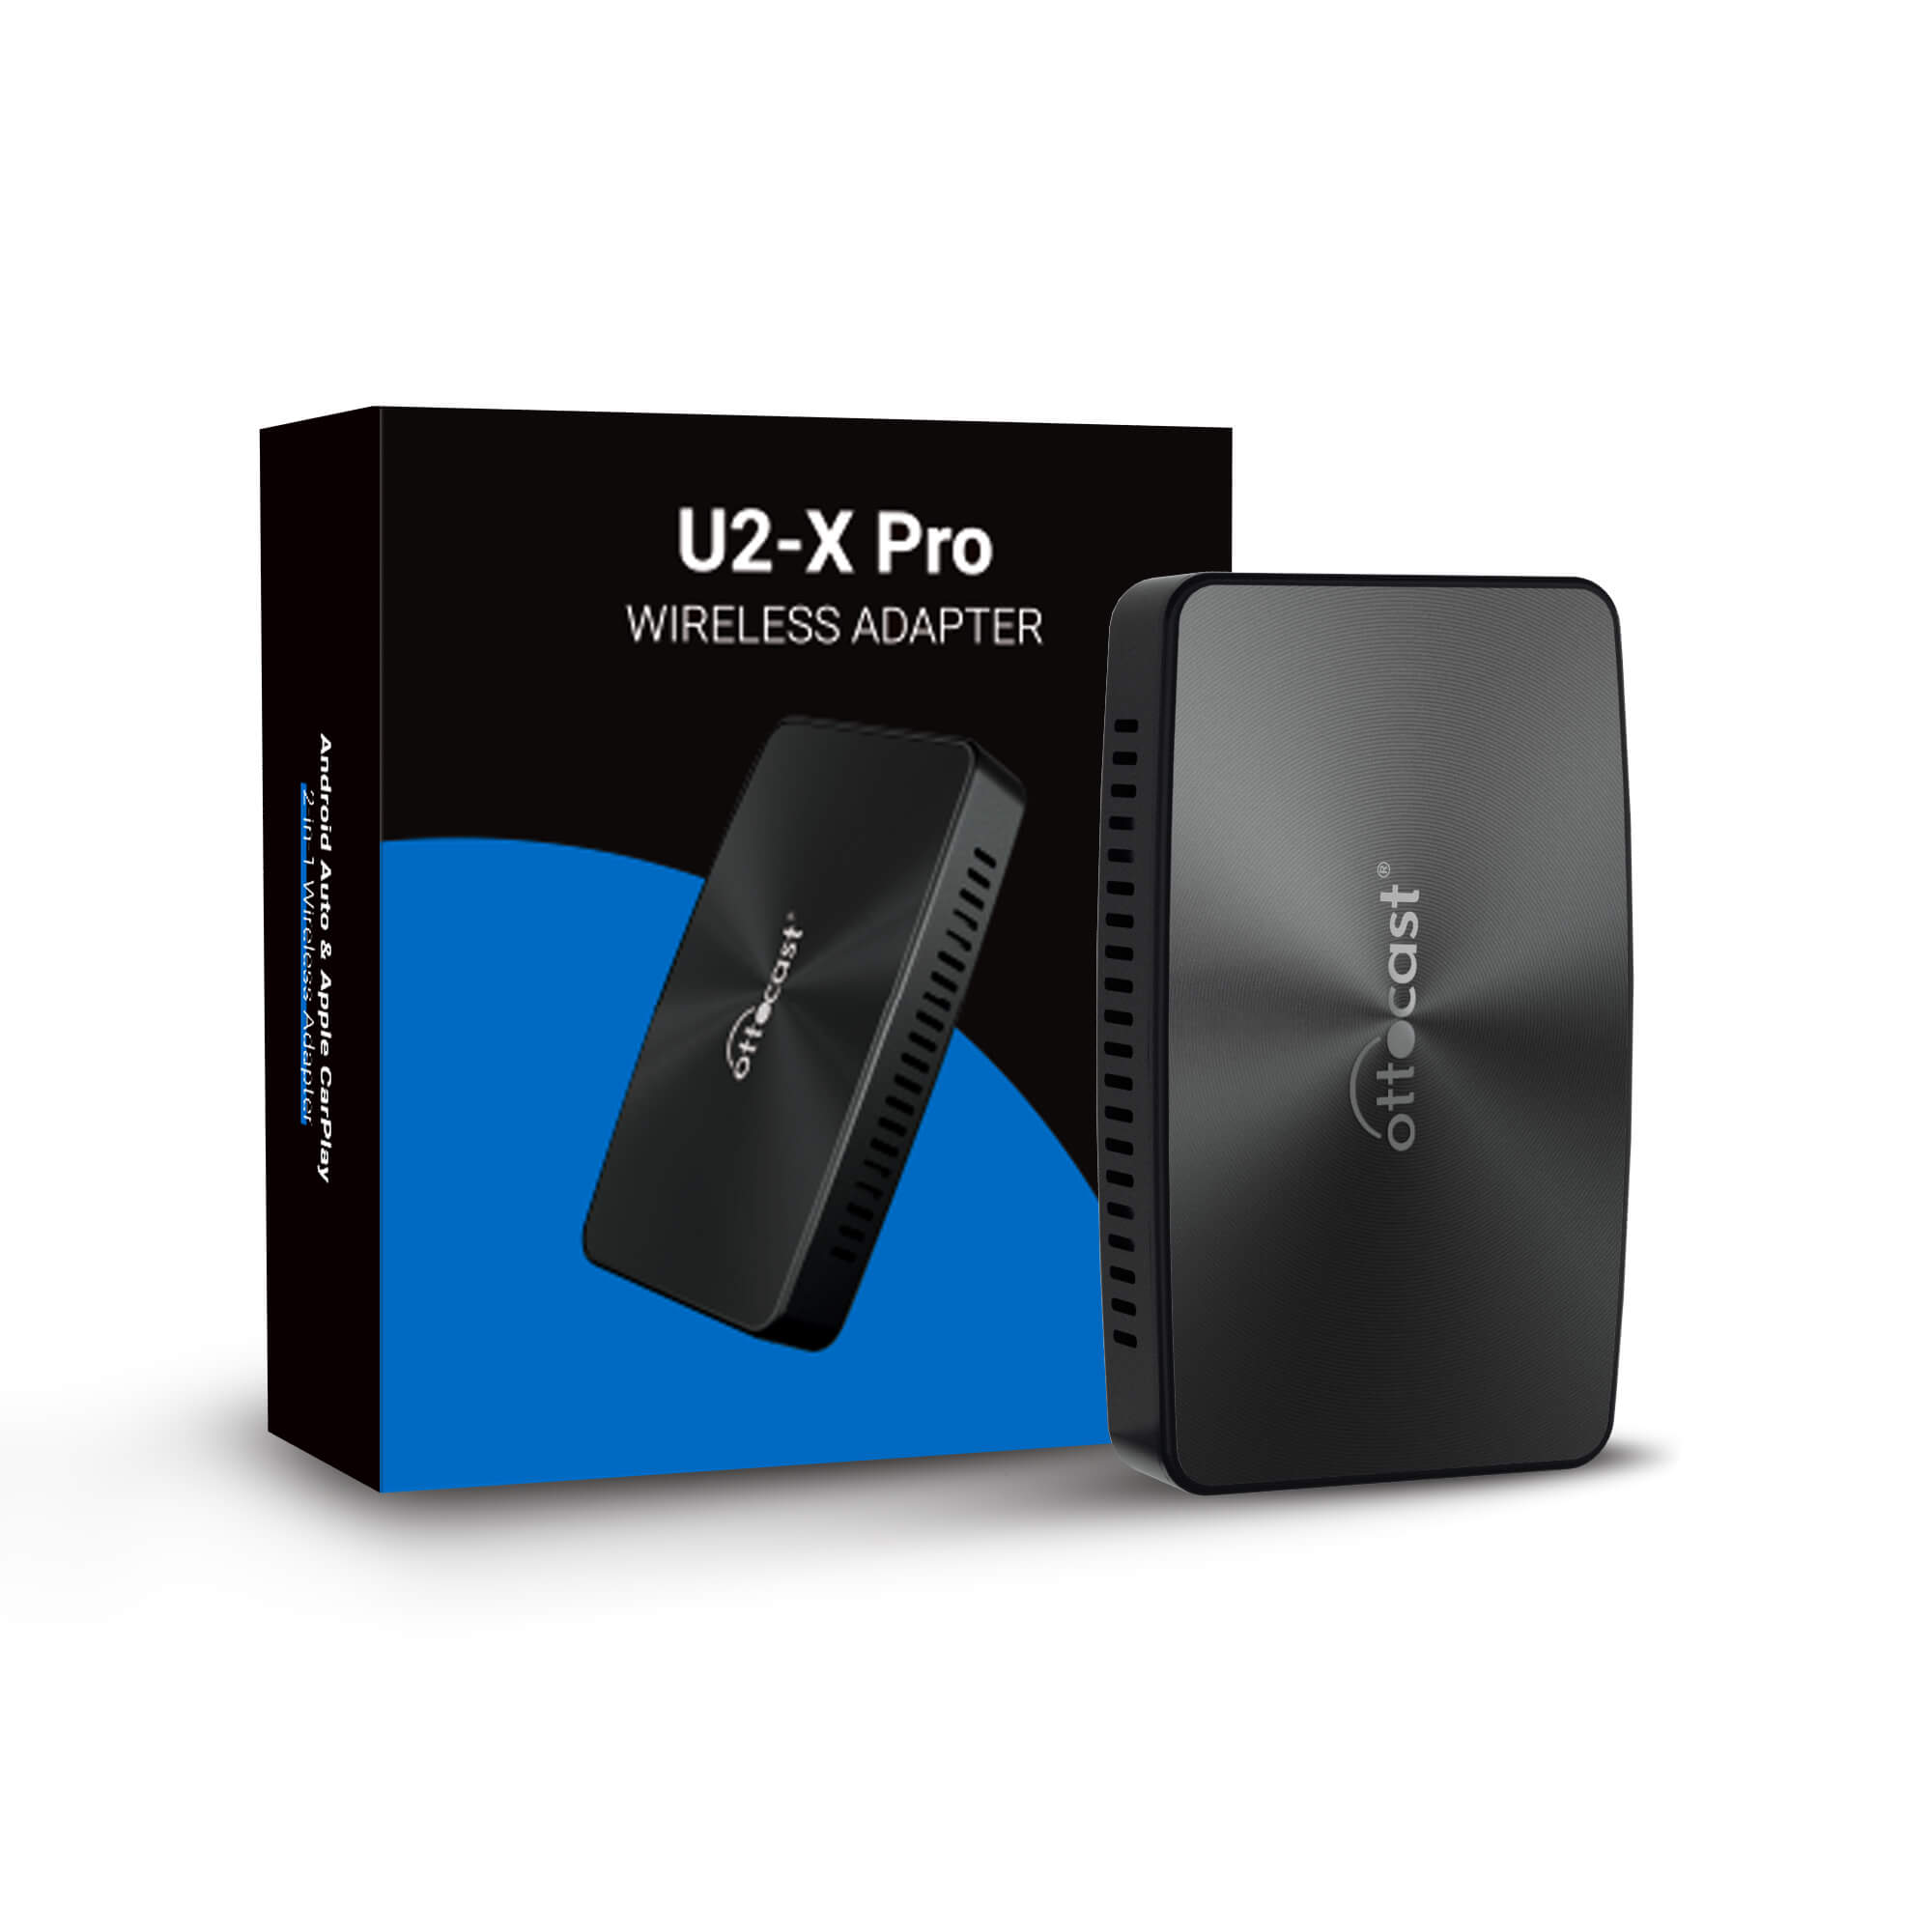 U2-X Pro CarPlay\Android Auto 2 in 1 Wireless Adapter